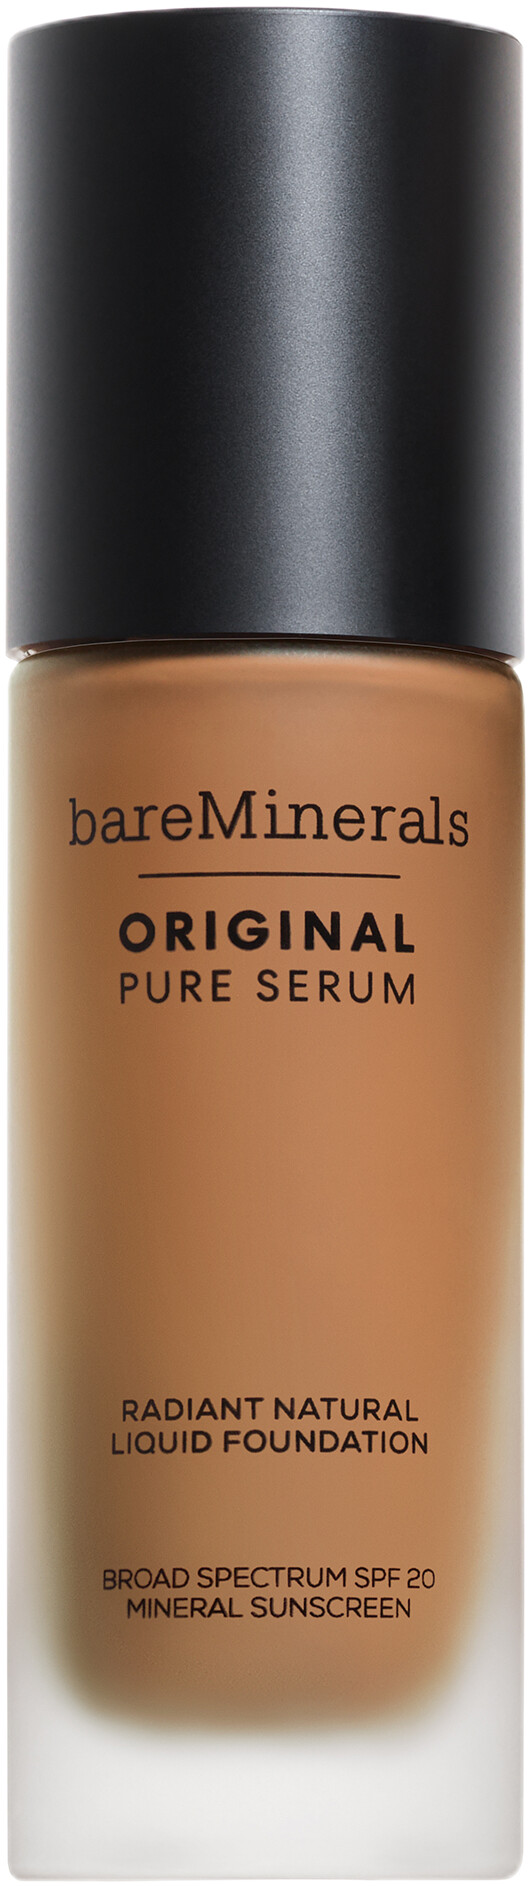 bareMinerals Original Pure Serum Radiant Natural Liquid Foundation SPF20 30ml 4.5 - Medium Deep Warm